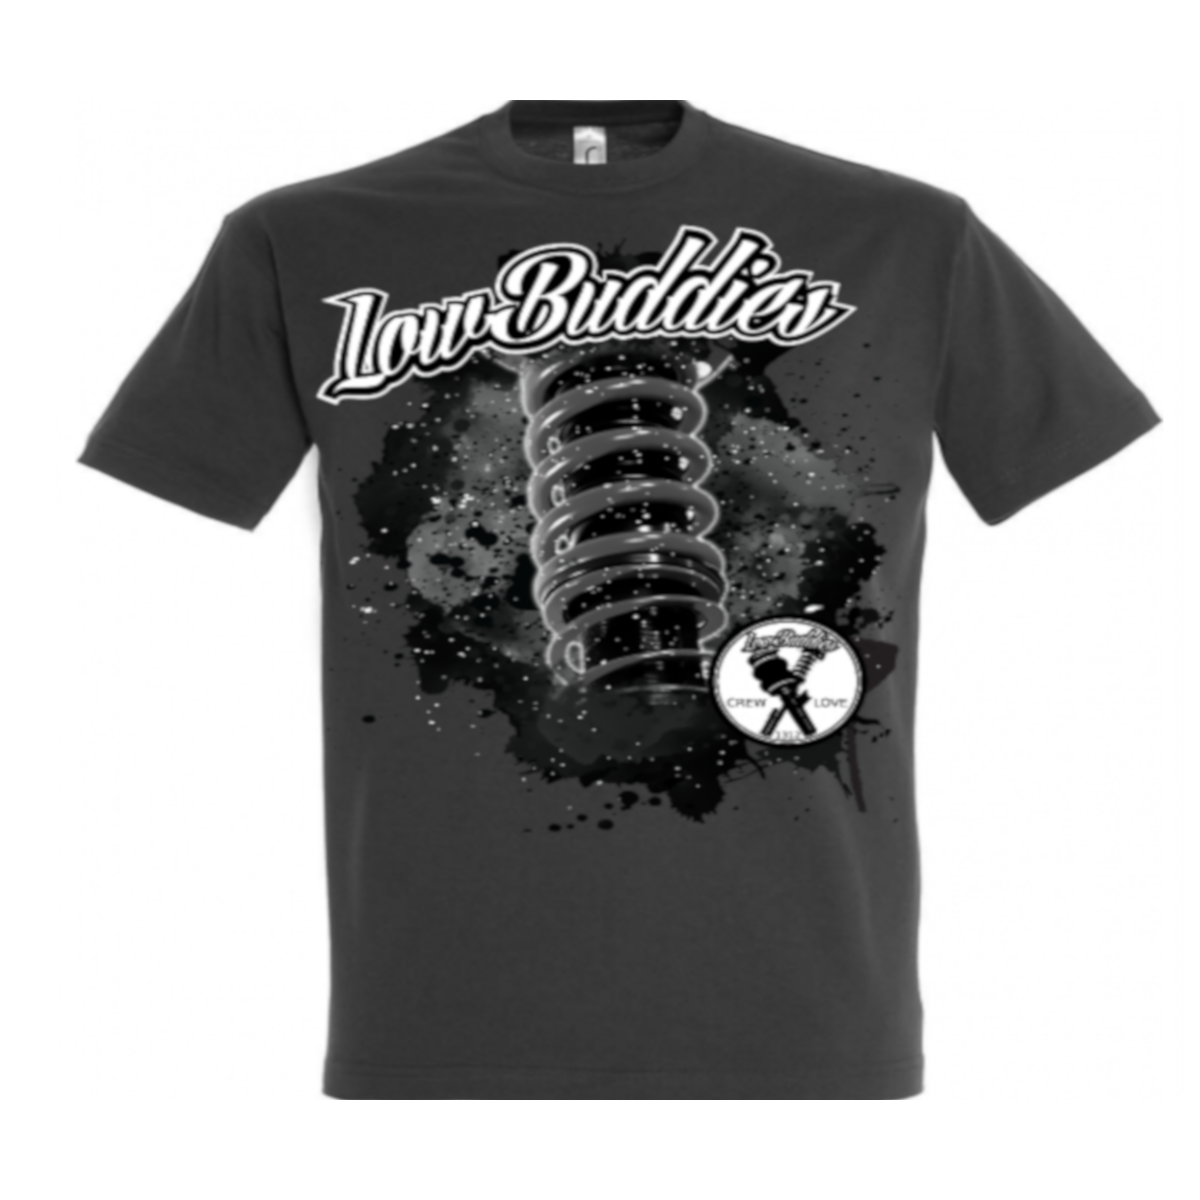 Low Buddies - Männer T-Shirt - Crewlove airride - grau